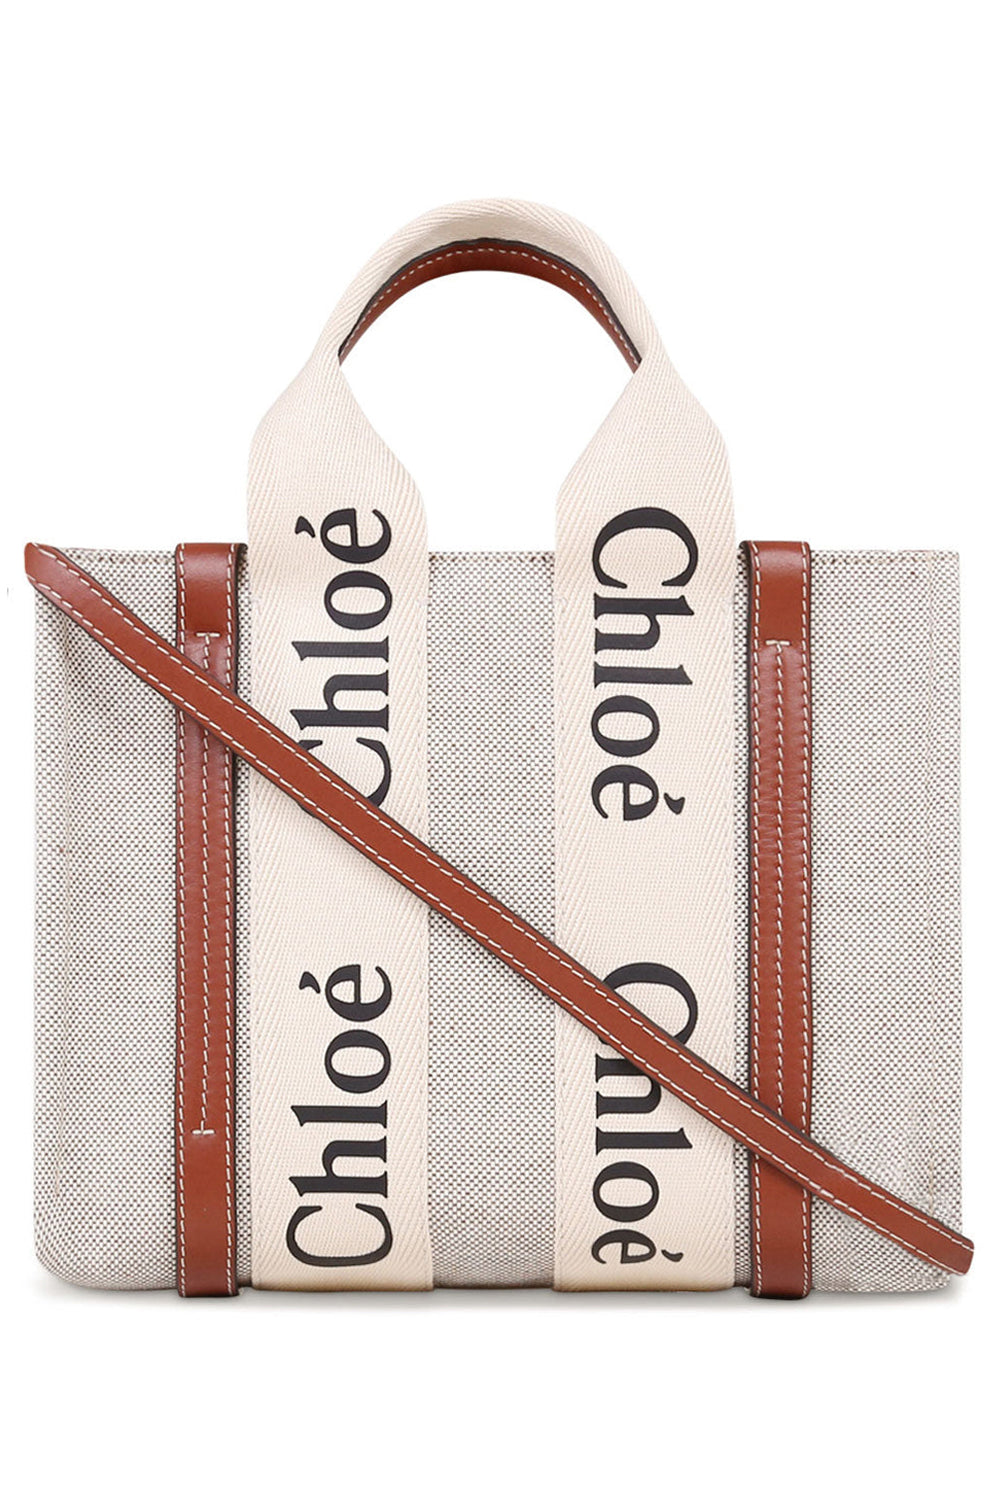 CHLOE BAGS BROWN WOODY SMALL TOTE | WHITE/BROWN